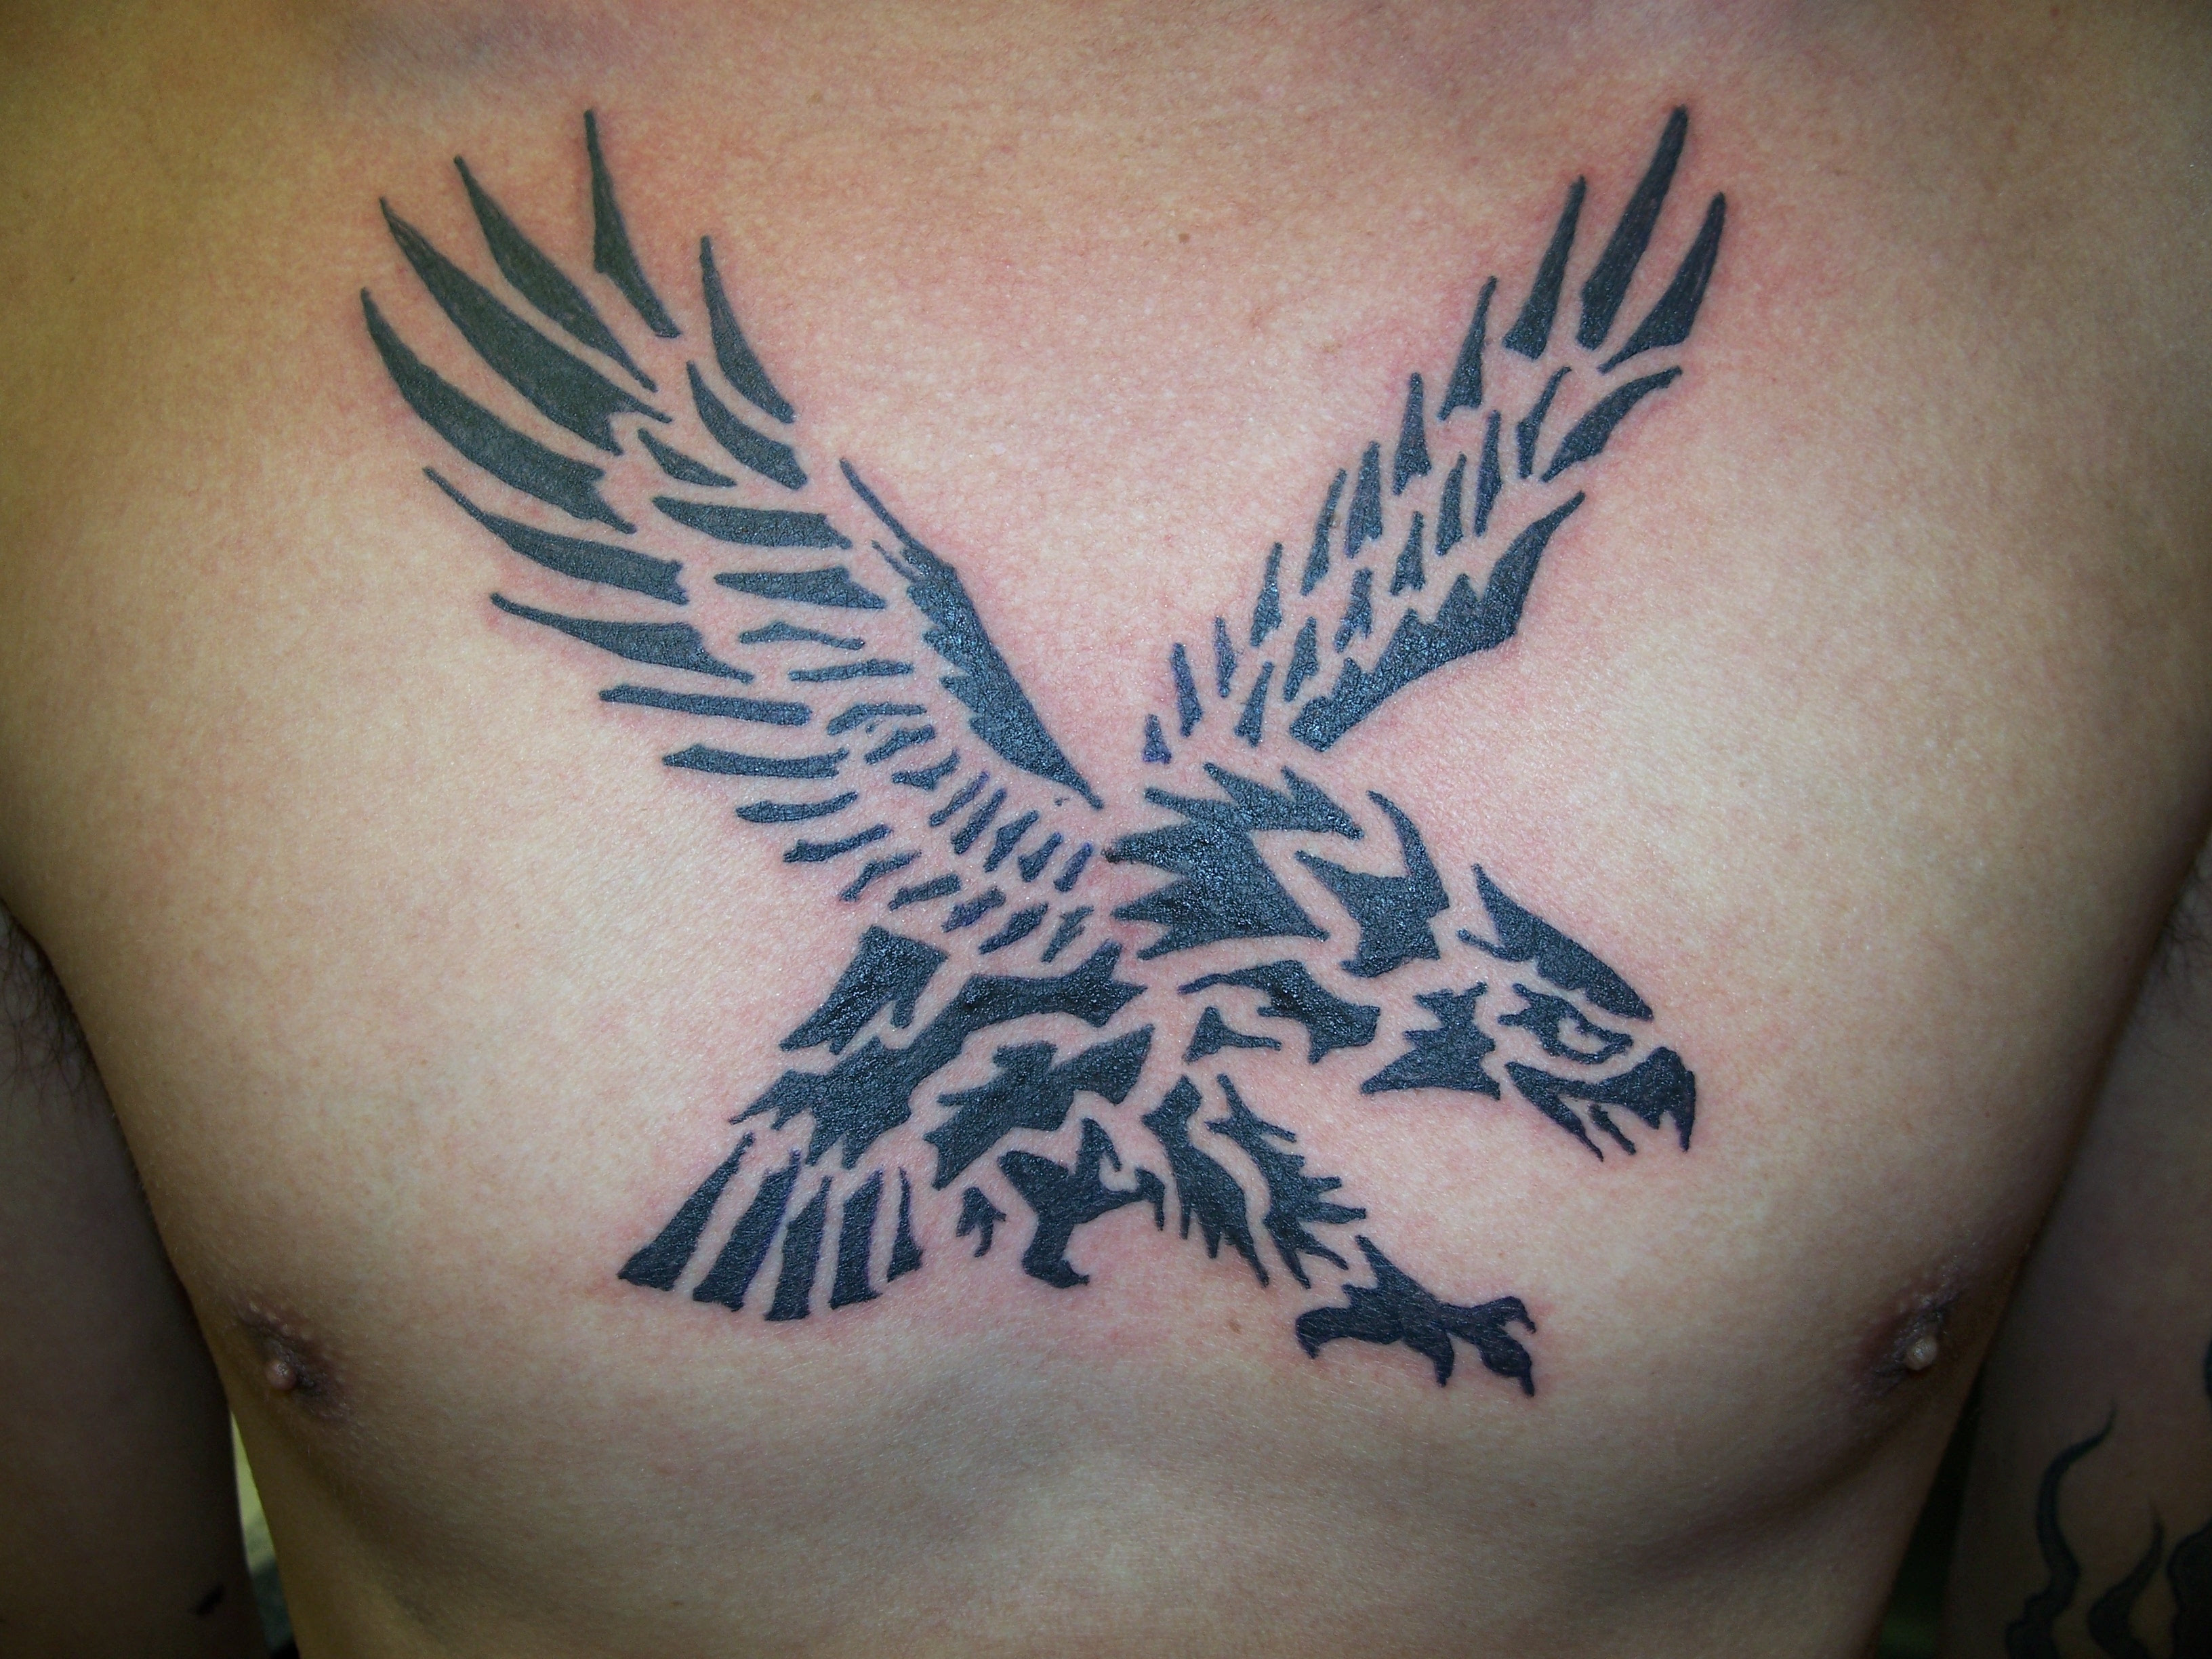 http://upload.wikimedia.org/wikipedia/commons/0/06/Tribal_eagle_tattoo_by_Keith_Killingsworth.JPG